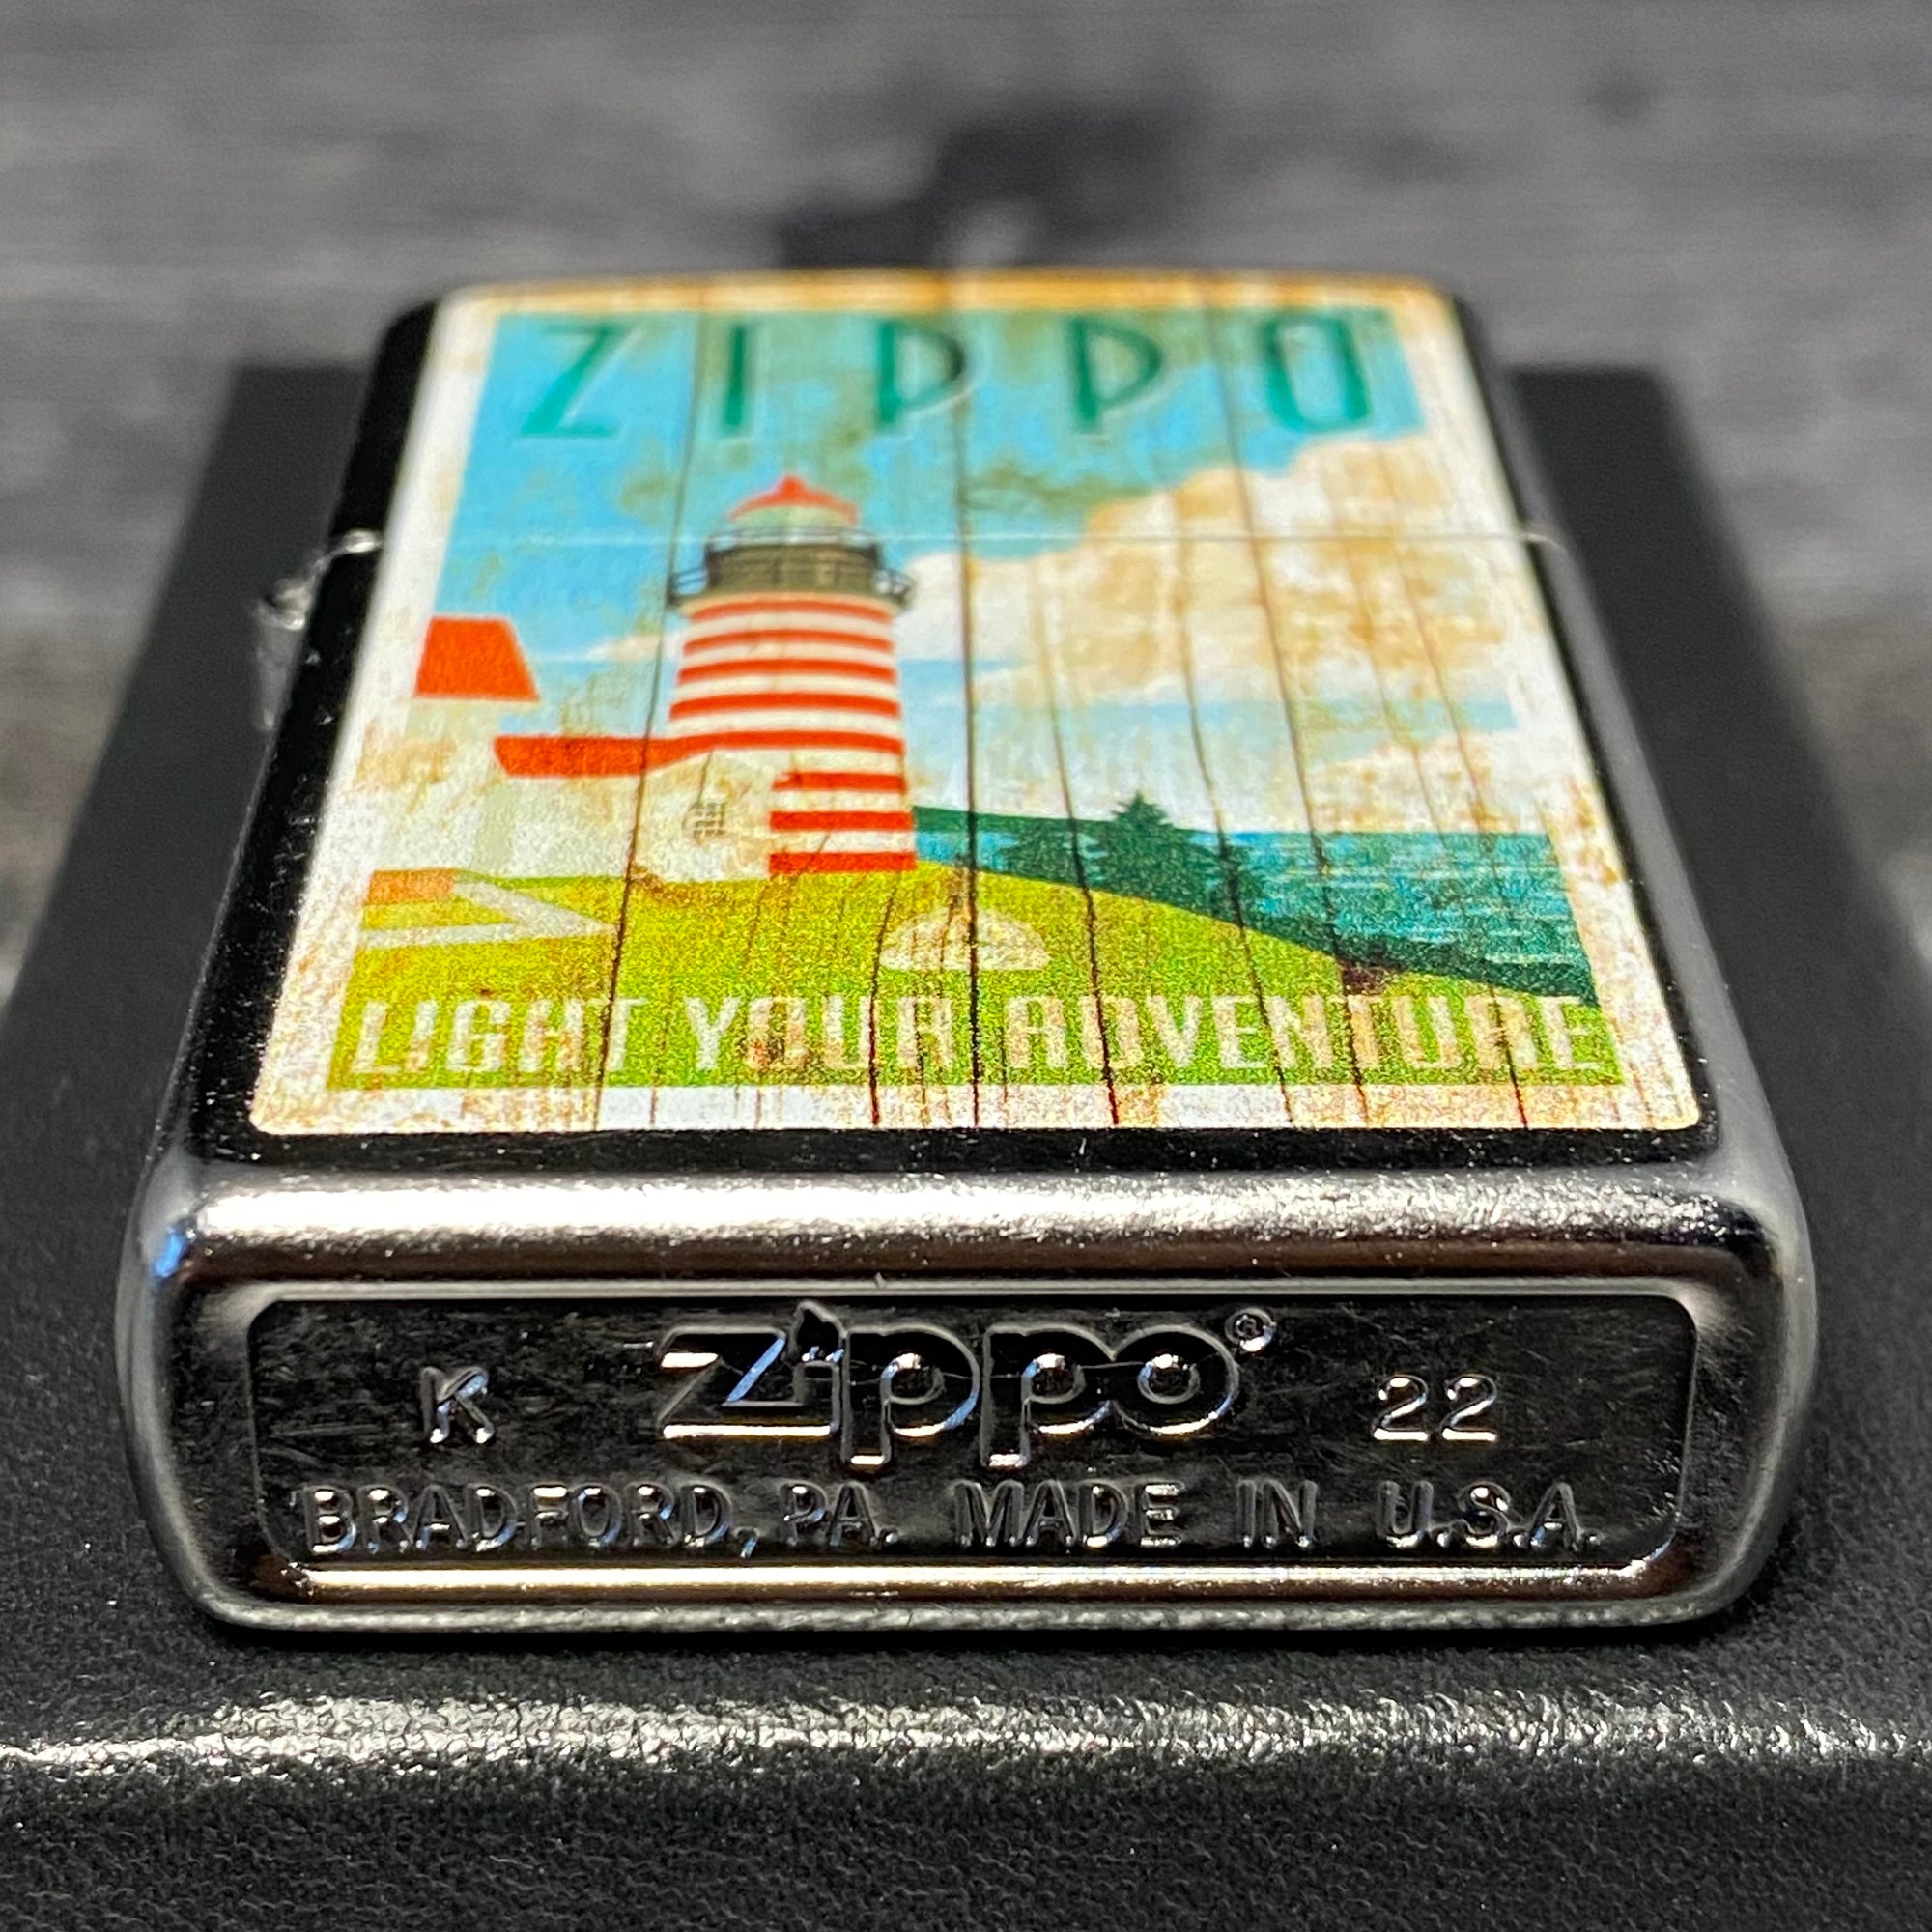 ZIPPO LIGHTER - Light Your Adventure - Street Chrome™️